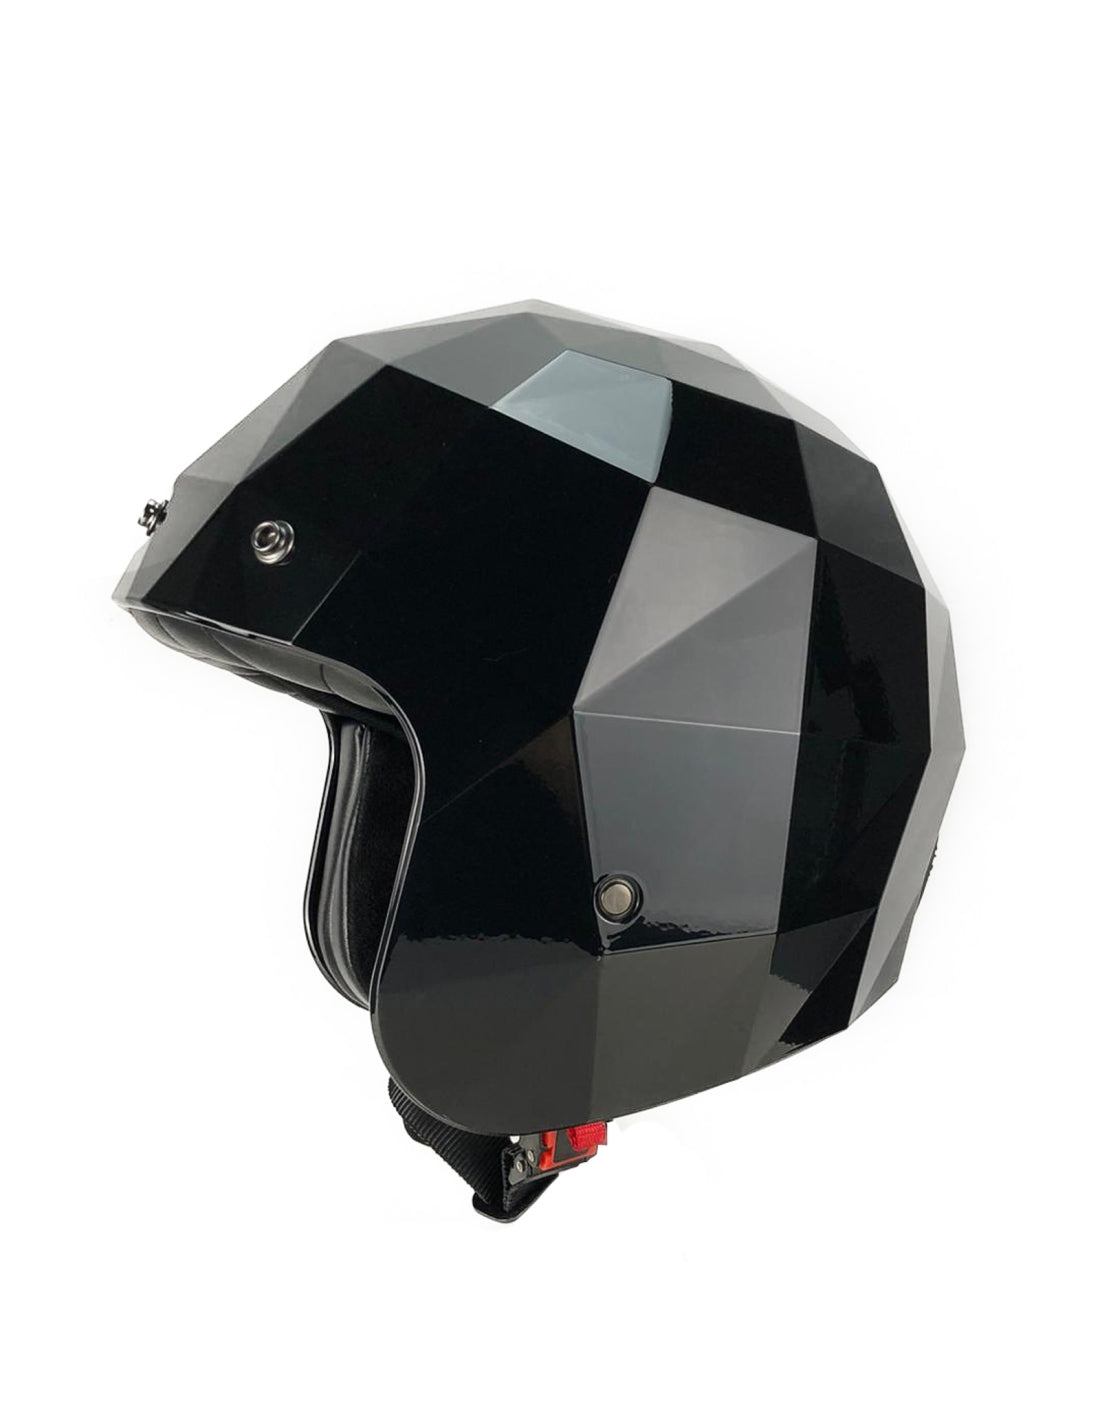 Holyfreedom Stealth CE Helmet - Black Diamond